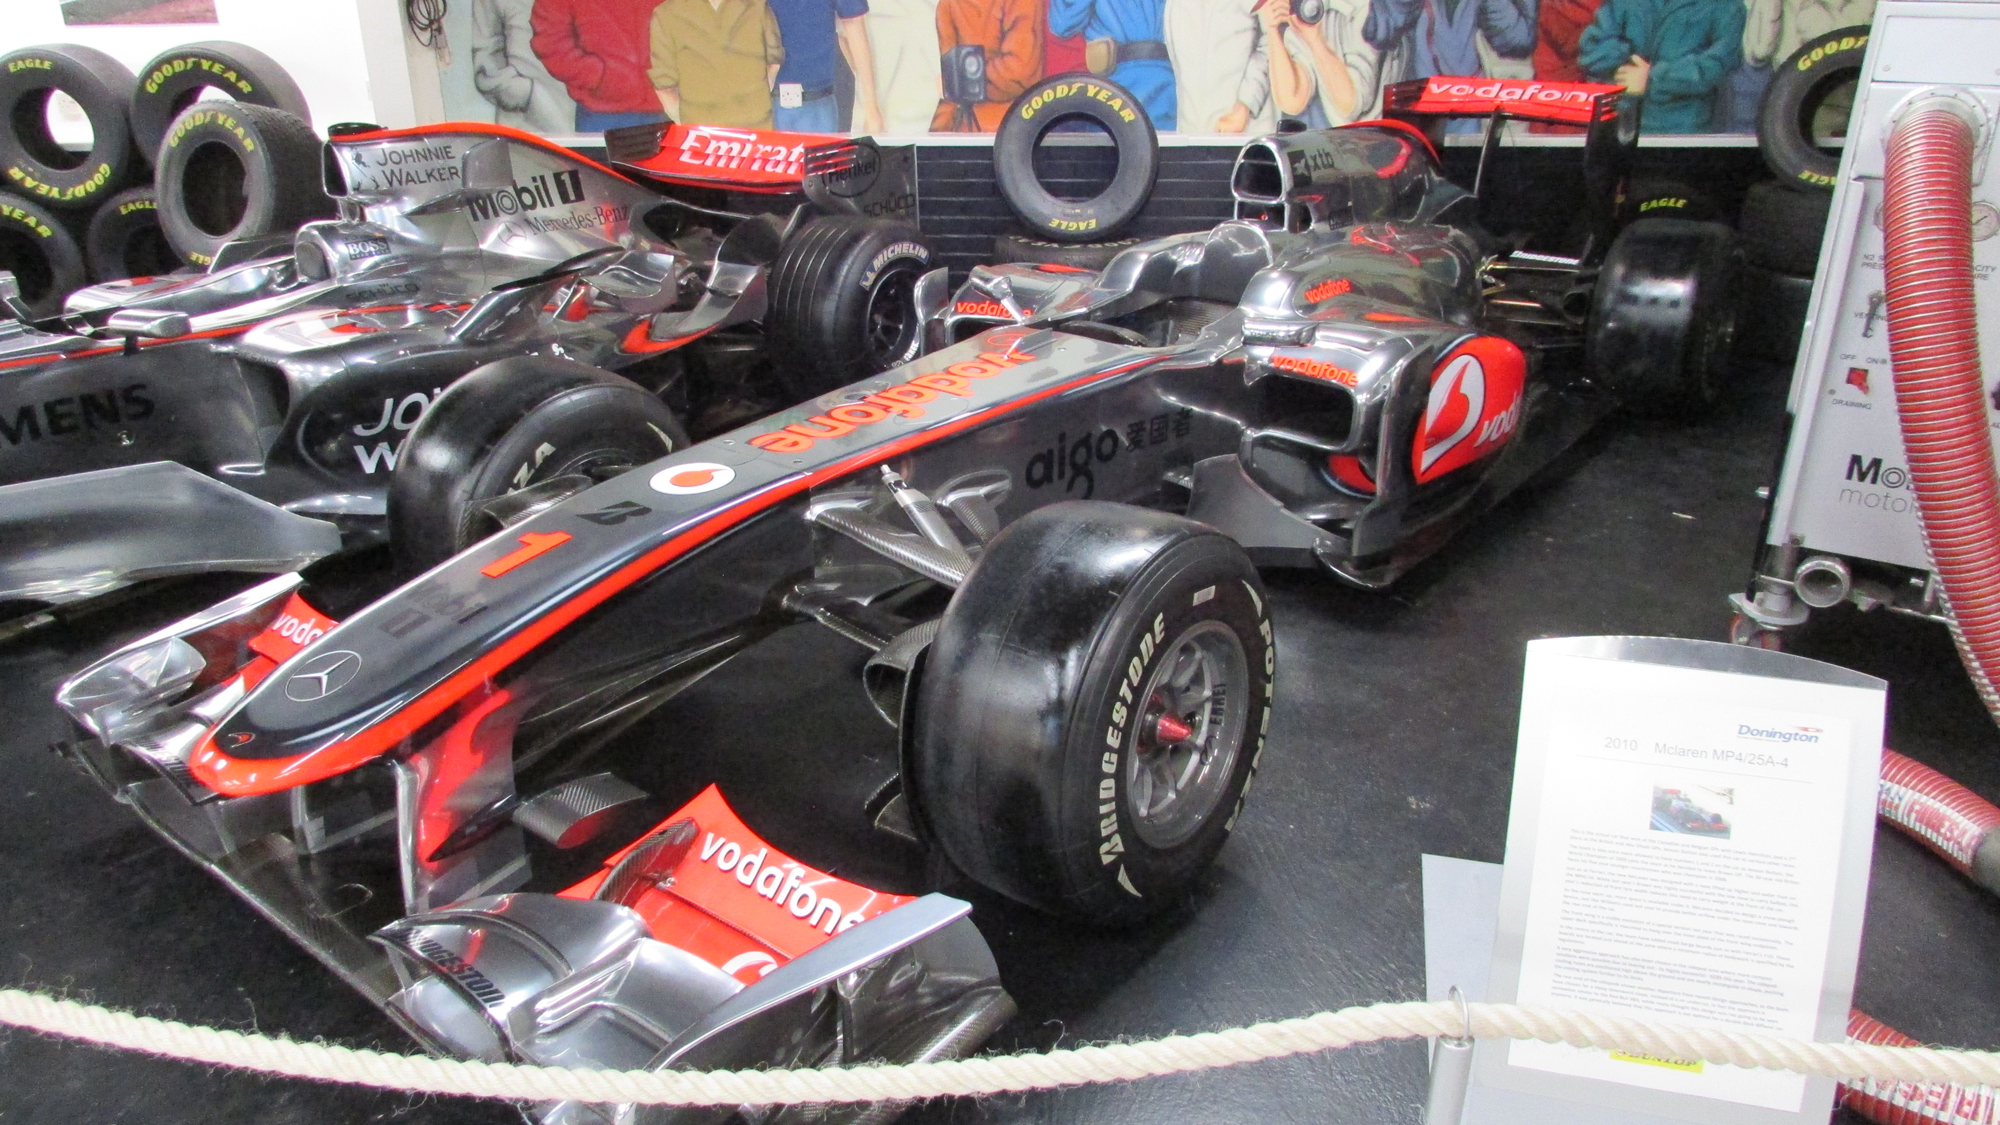 Lewis Hamilton’s Racing Car